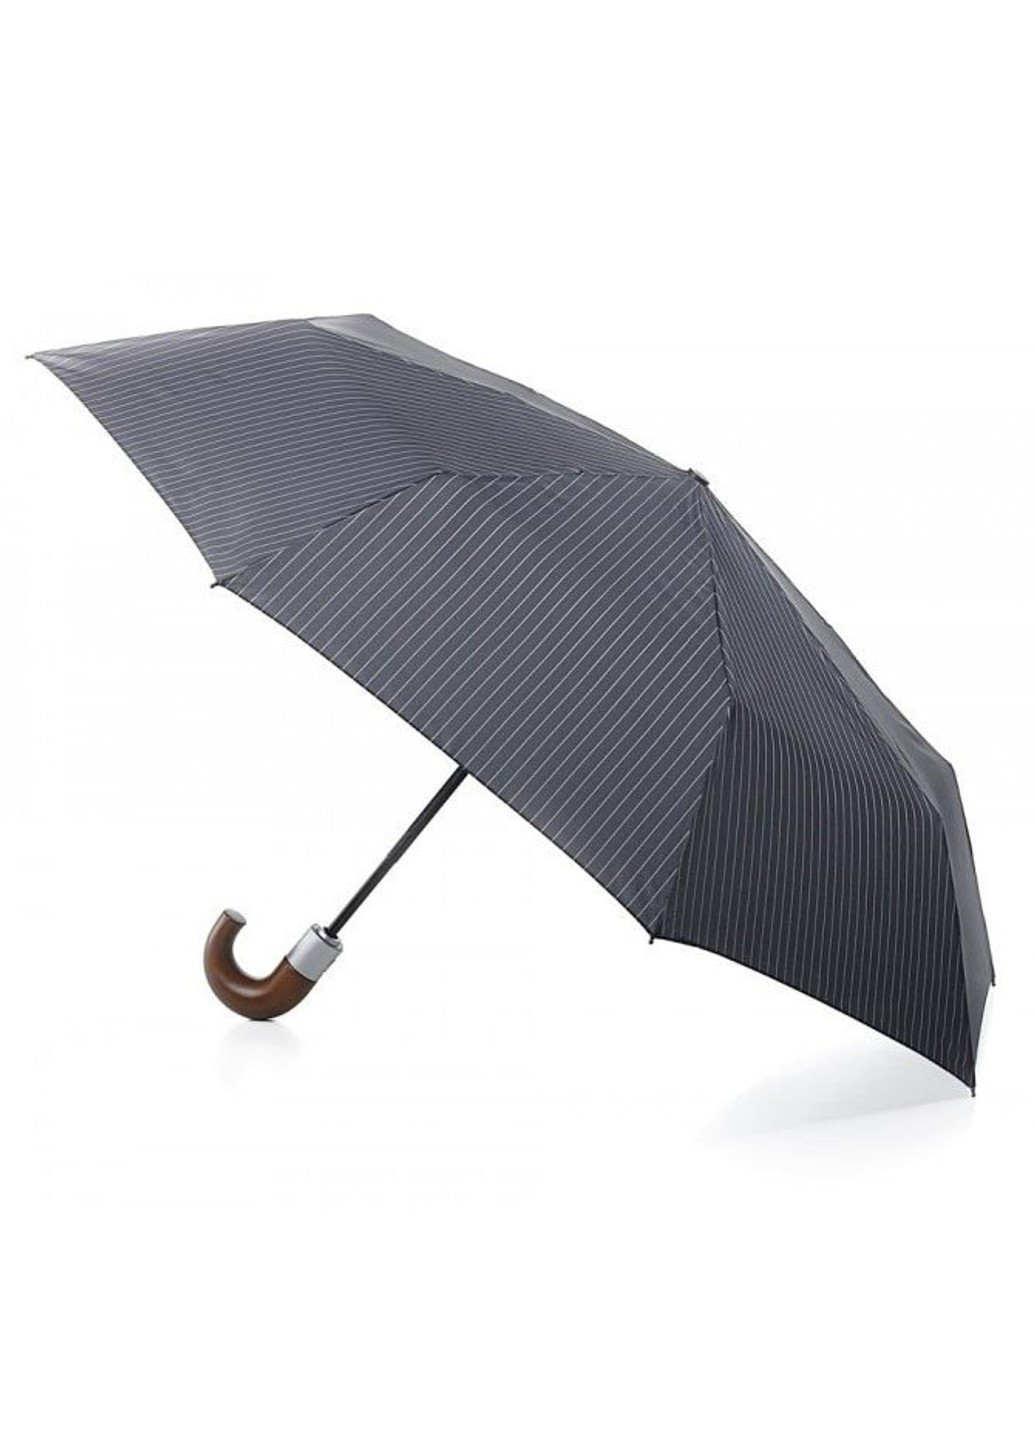 Мужской зонт автомат Chelsea-2 G818 - Grey (Серый) Fulton (262087178)